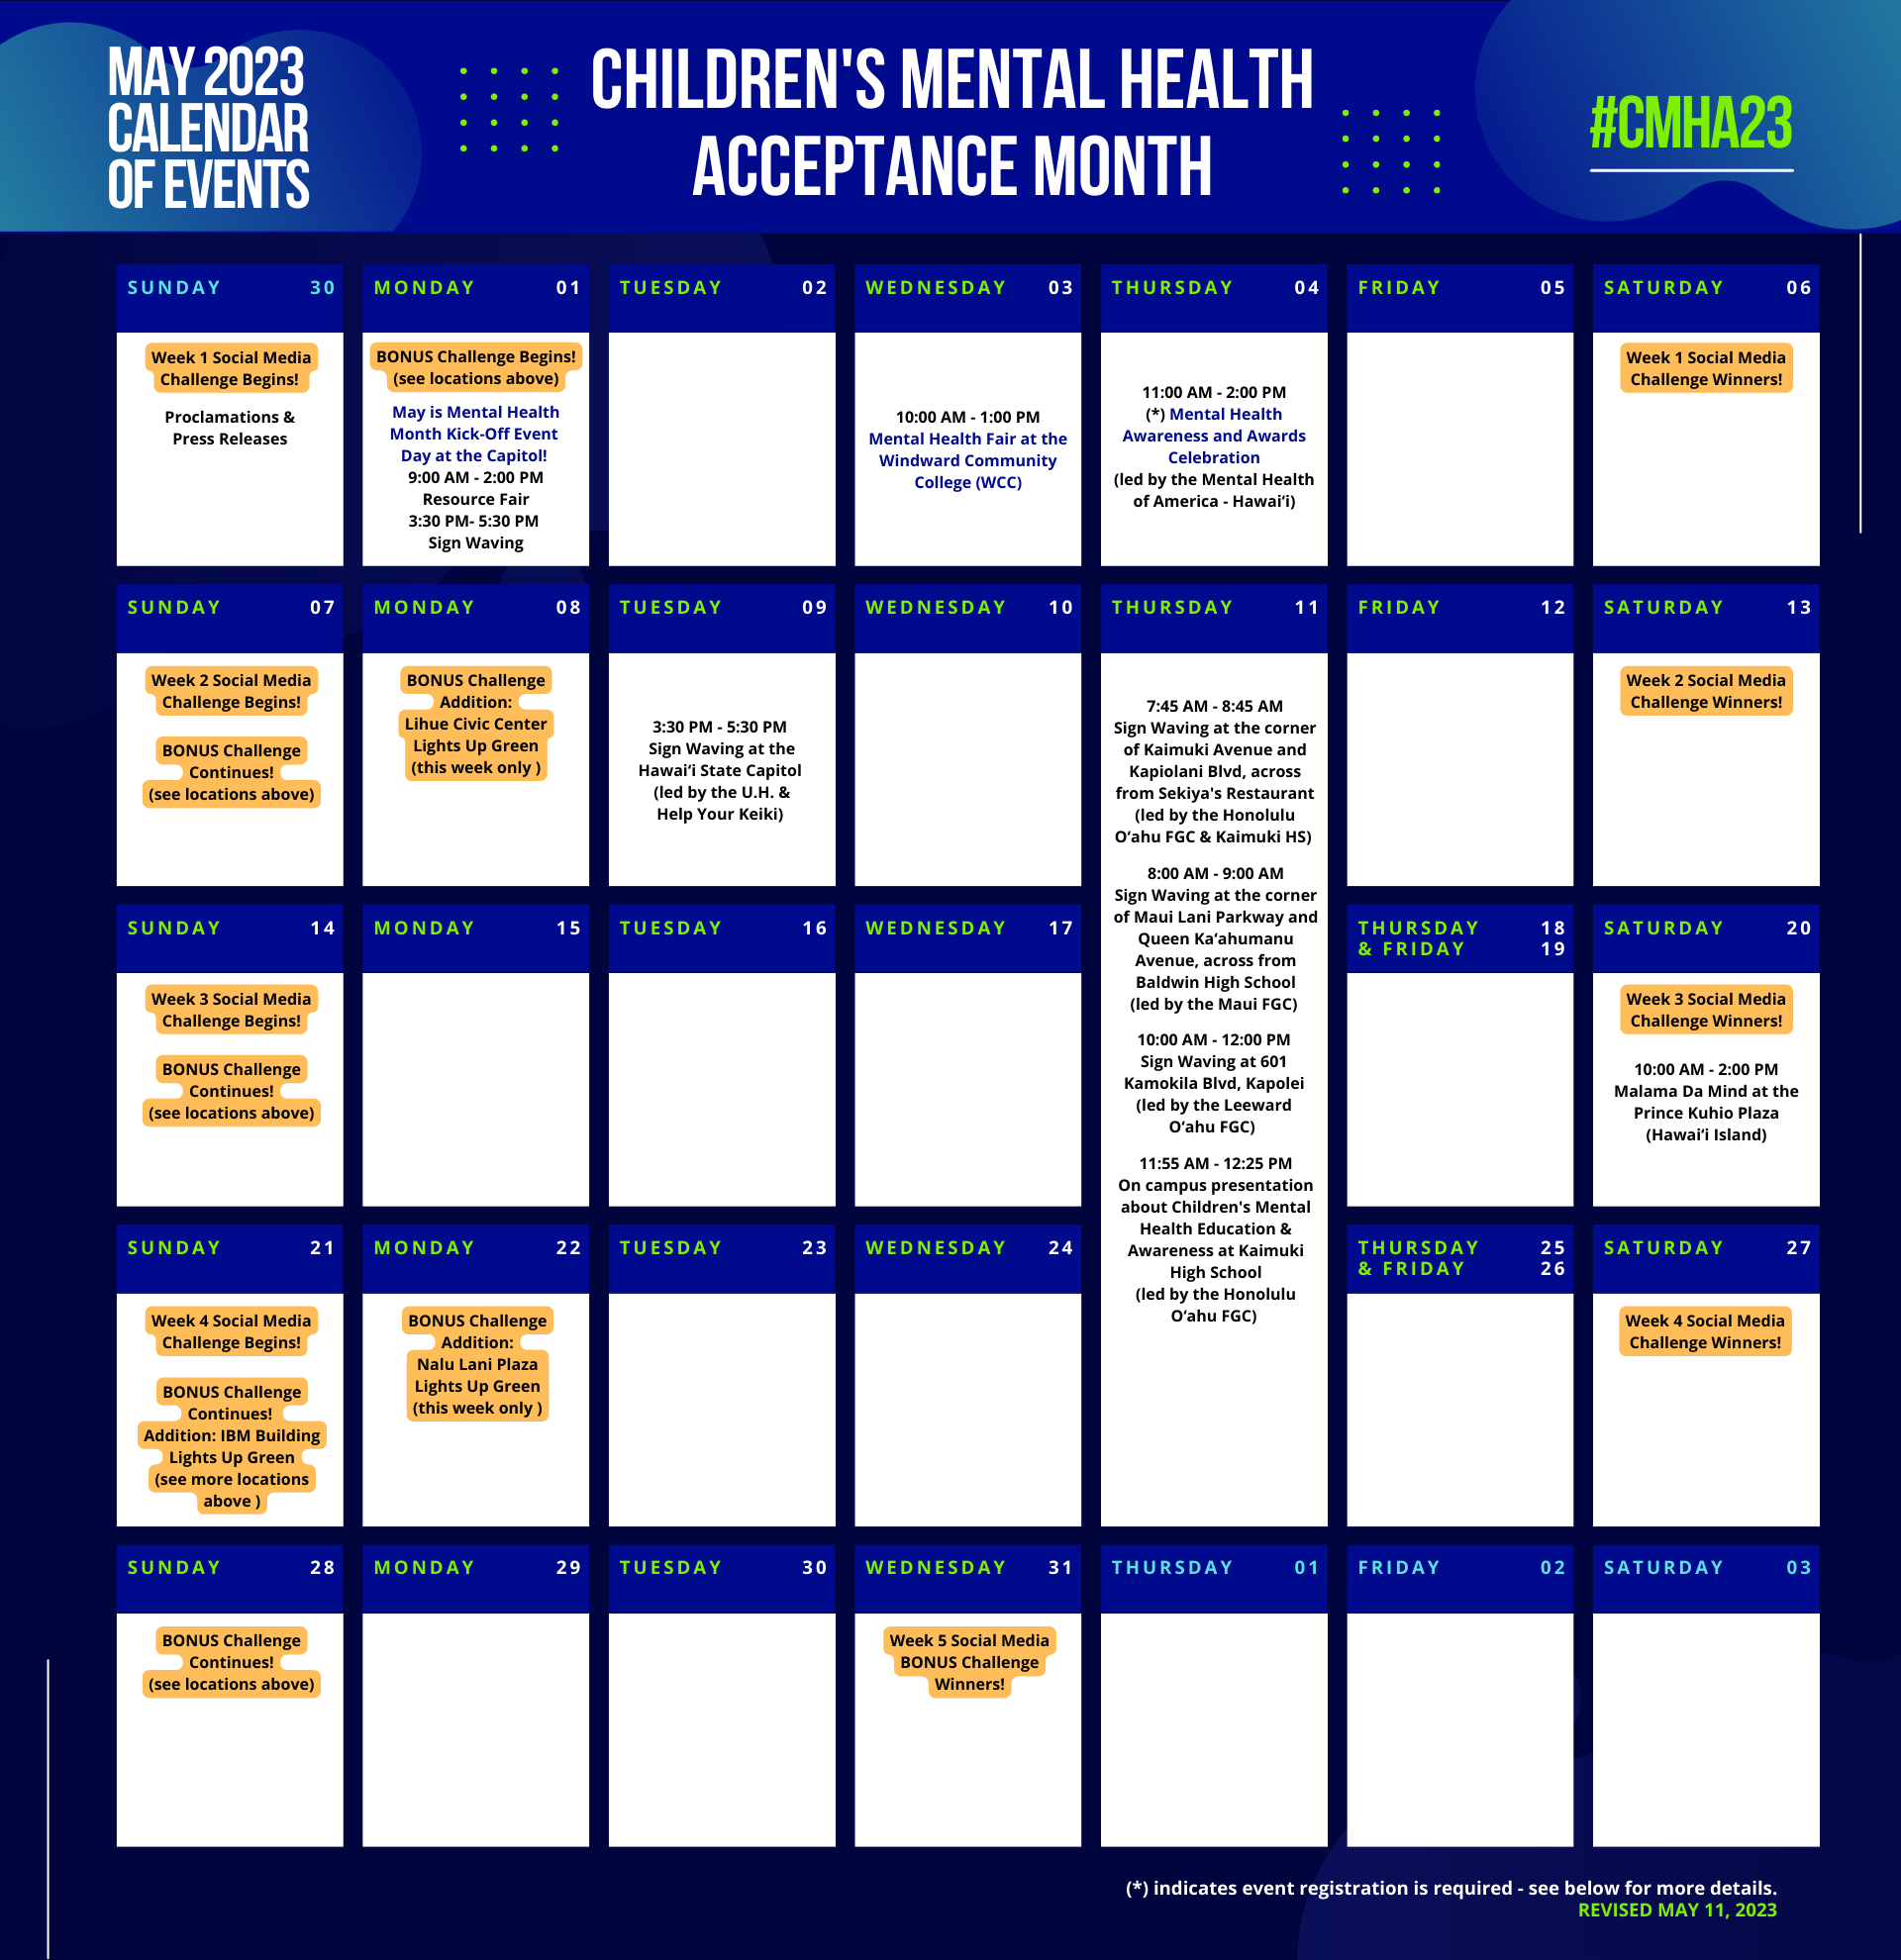 2023 Children's Mental Health Acceptance Calendar of Events (as of April 25, 2023)